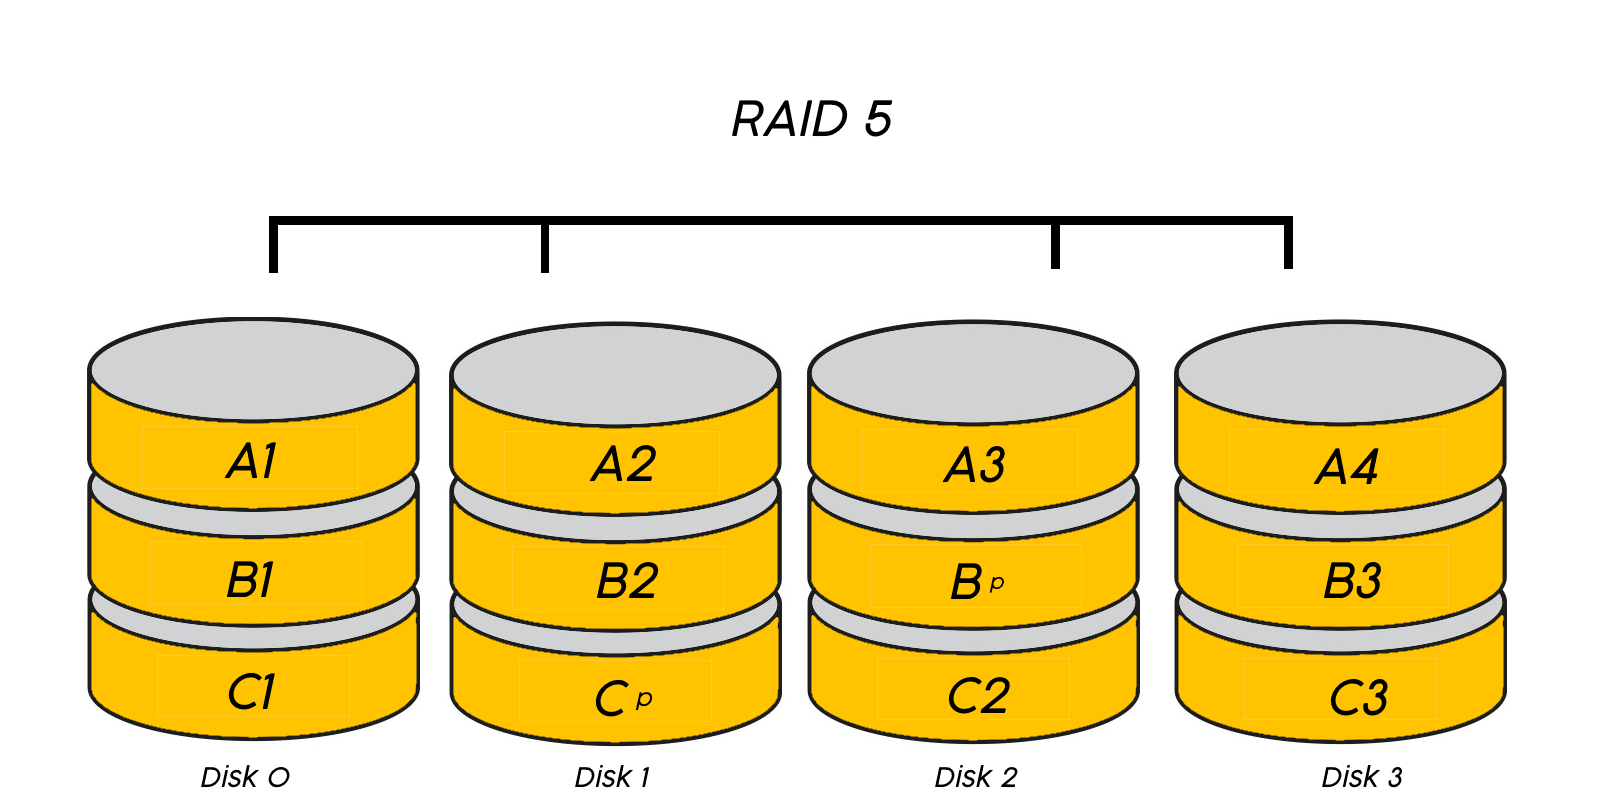 RAID 5 diagram and explanation of disks